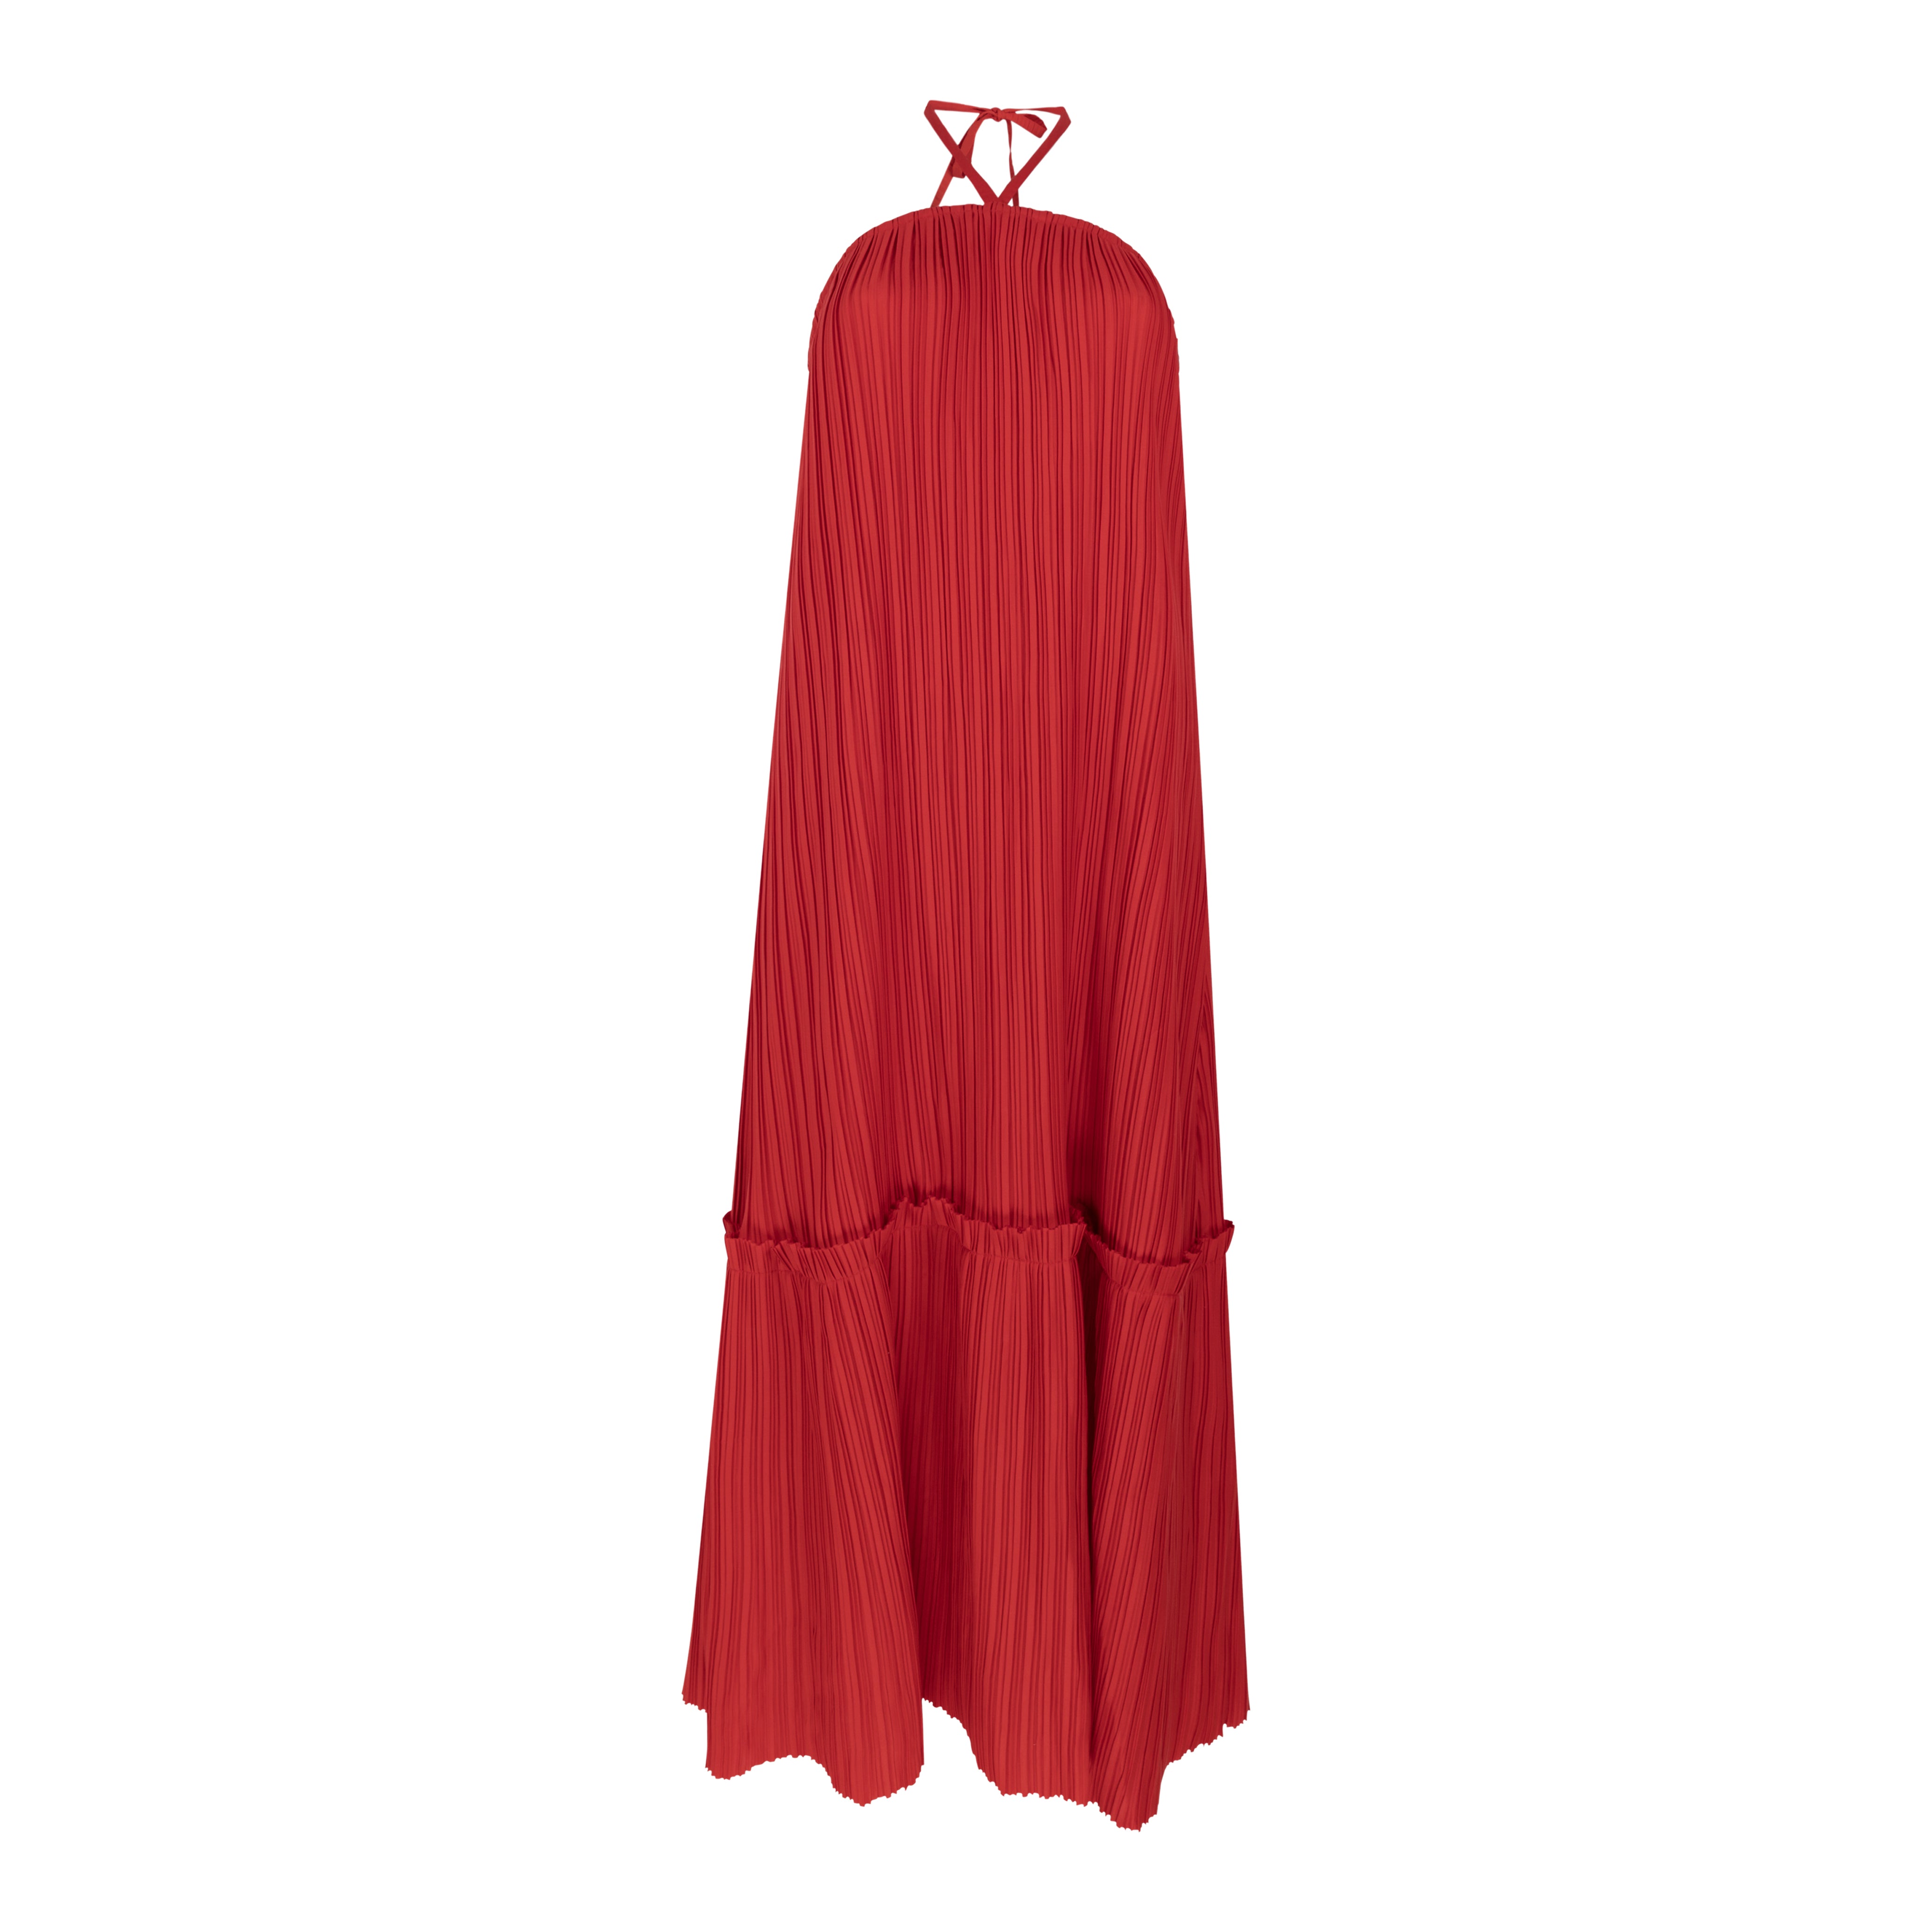 Rent for your upcoming holiday! Date night Bambah red dress to rent - kledingverhuur Nederland, België